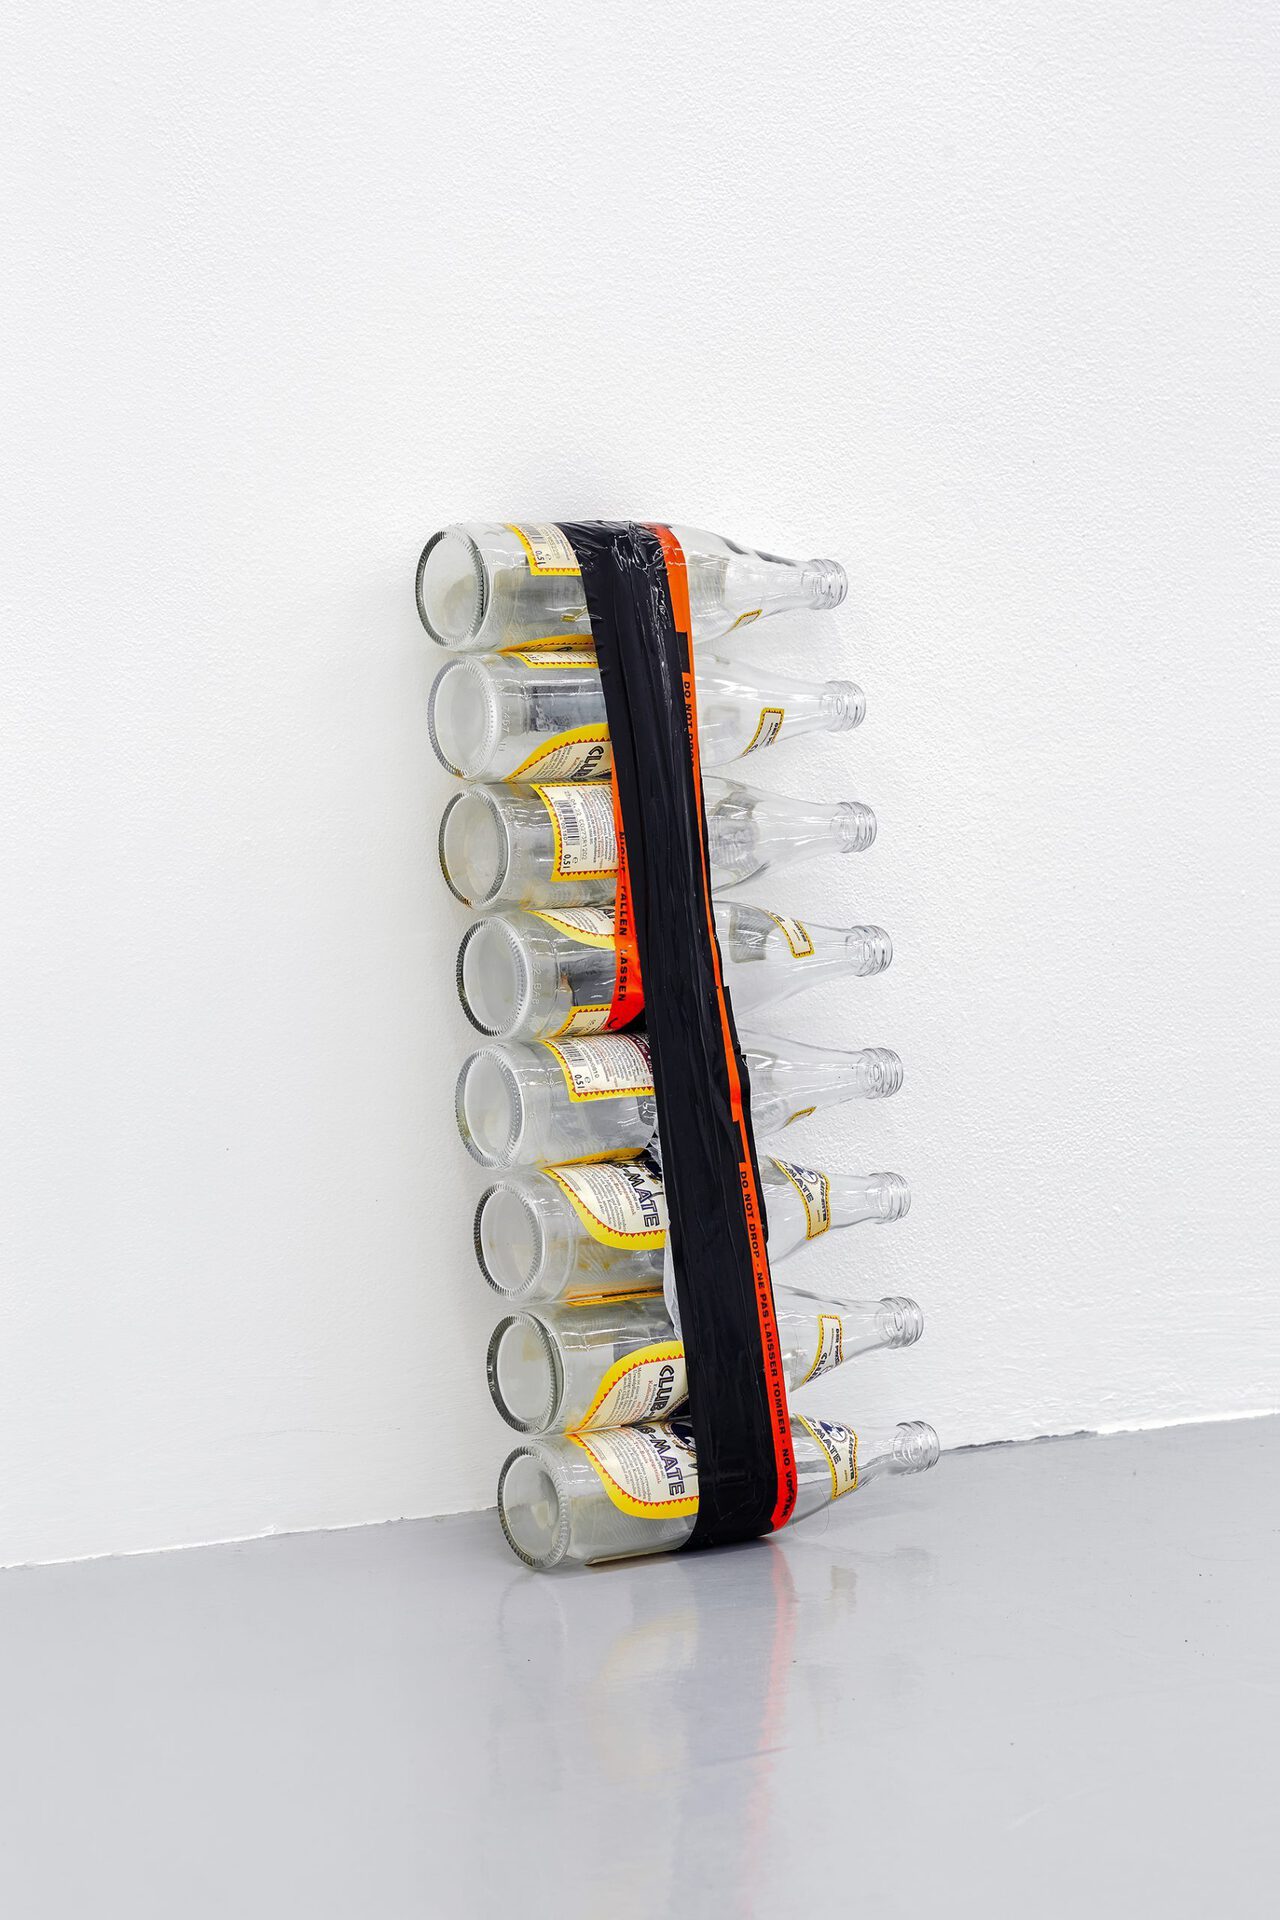 Snake Charmer I, 2021, Club-Mate bottles, wood and packaging tape, 52 × 24 × 6,5 cm